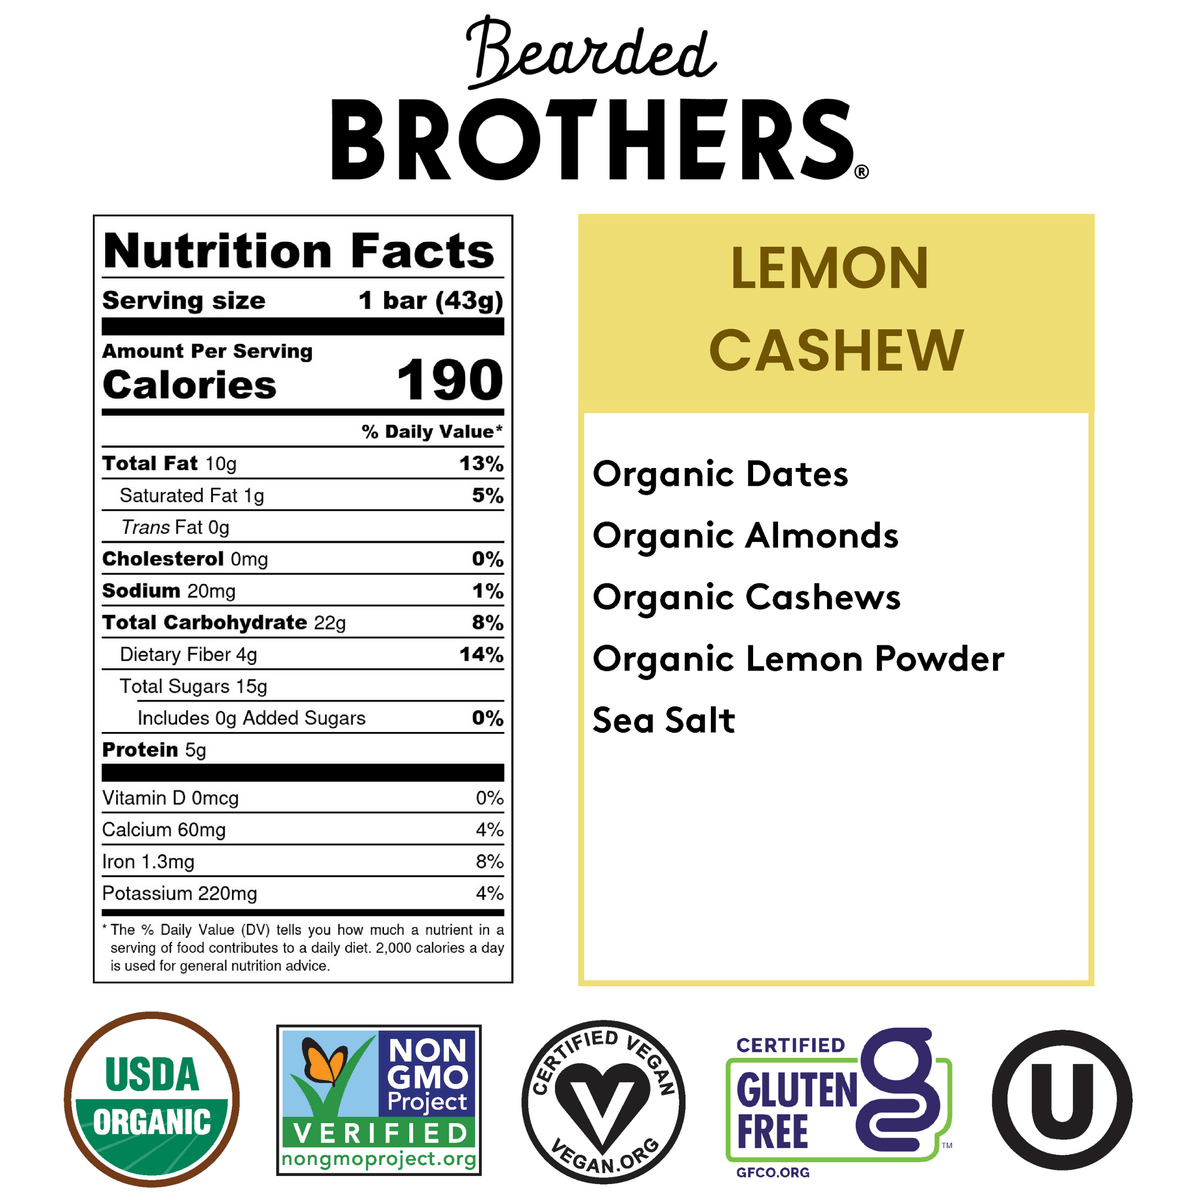 Luscious Lemon Cashew - Bearded Brothers